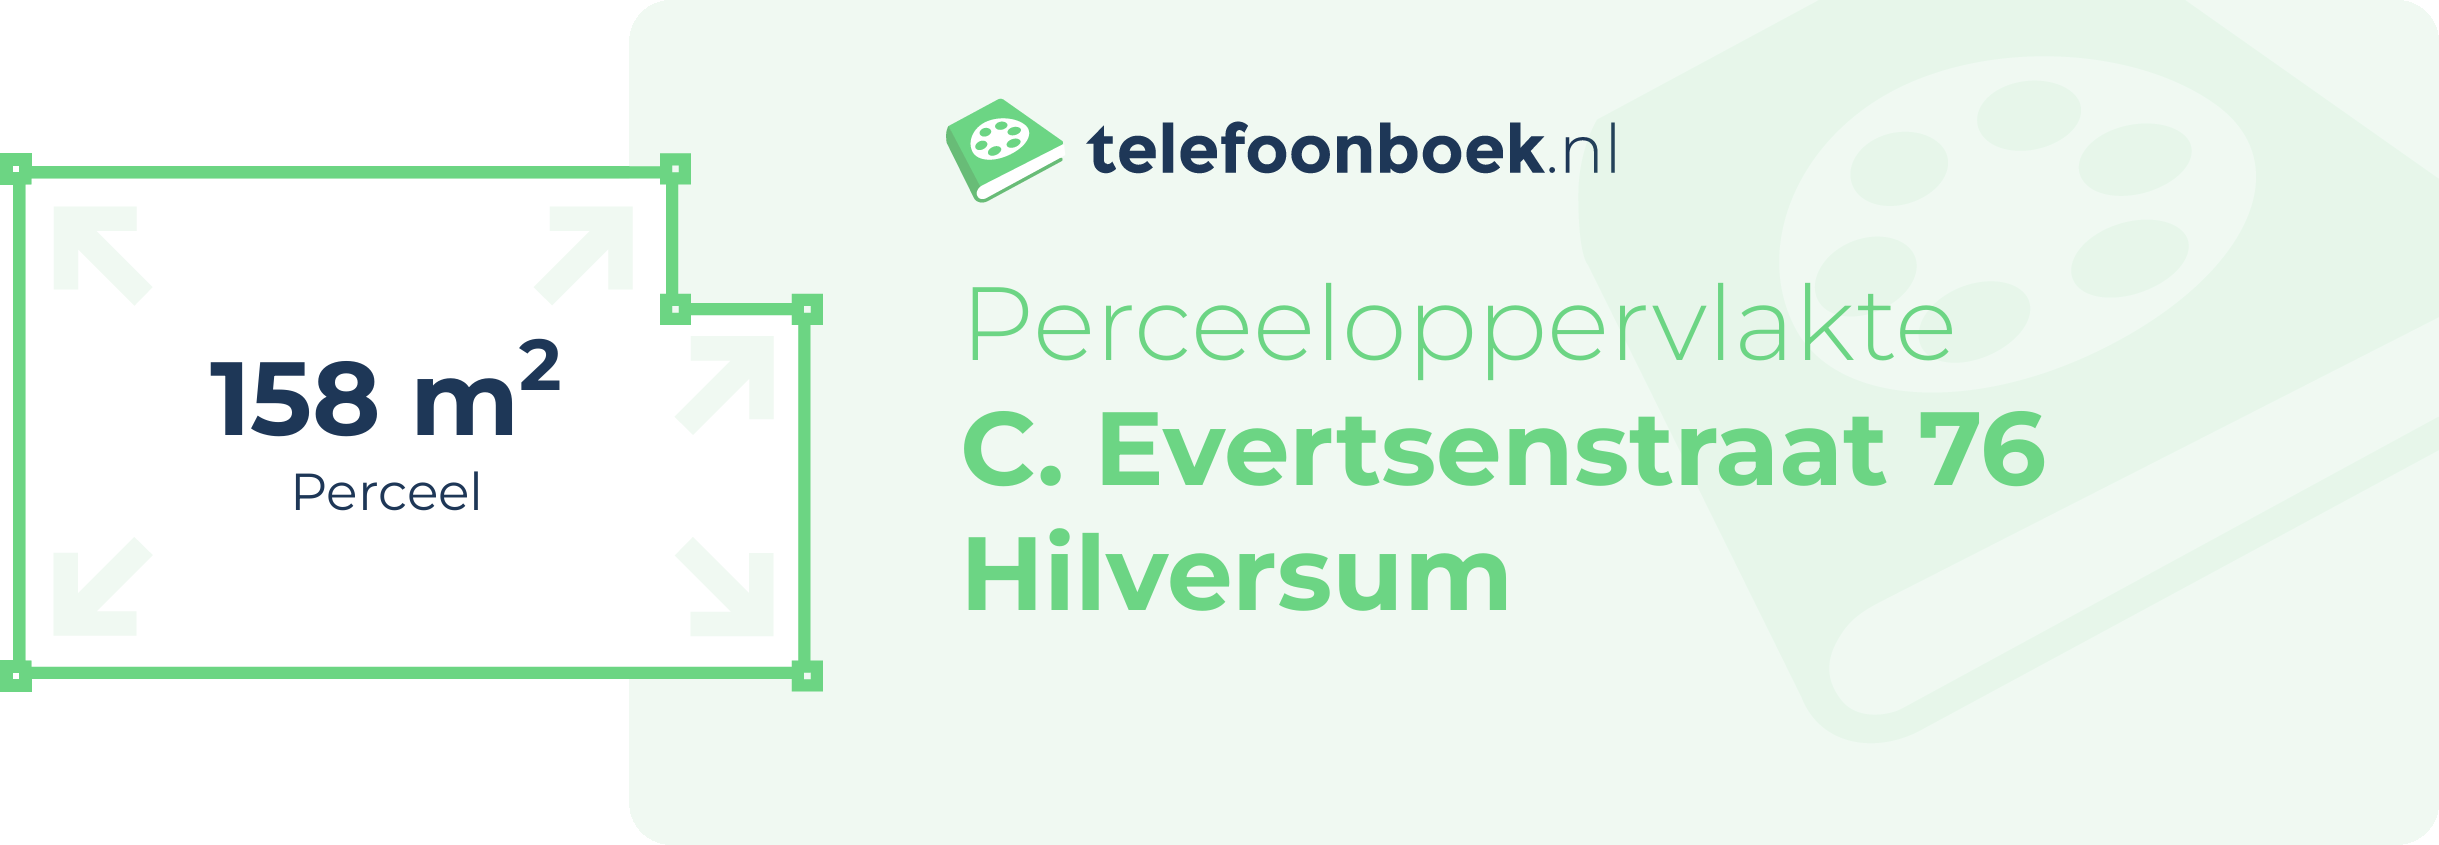 Perceeloppervlakte C. Evertsenstraat 76 Hilversum